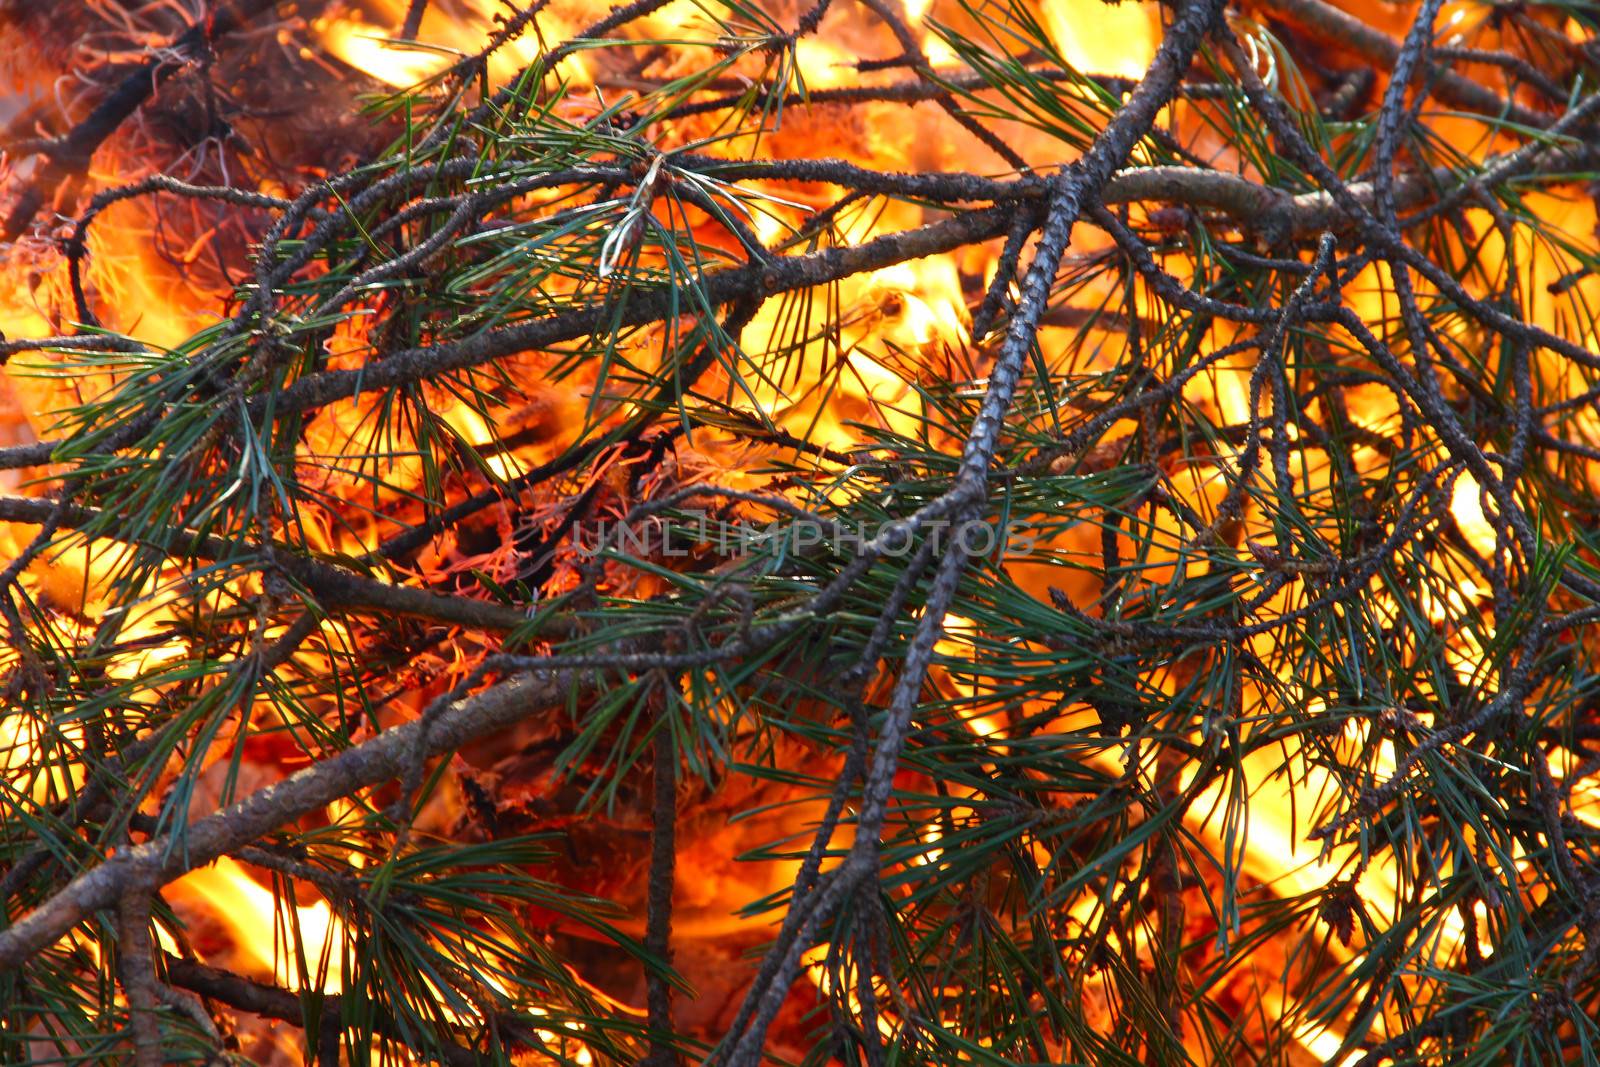 Burning pine forest fire macro closeup